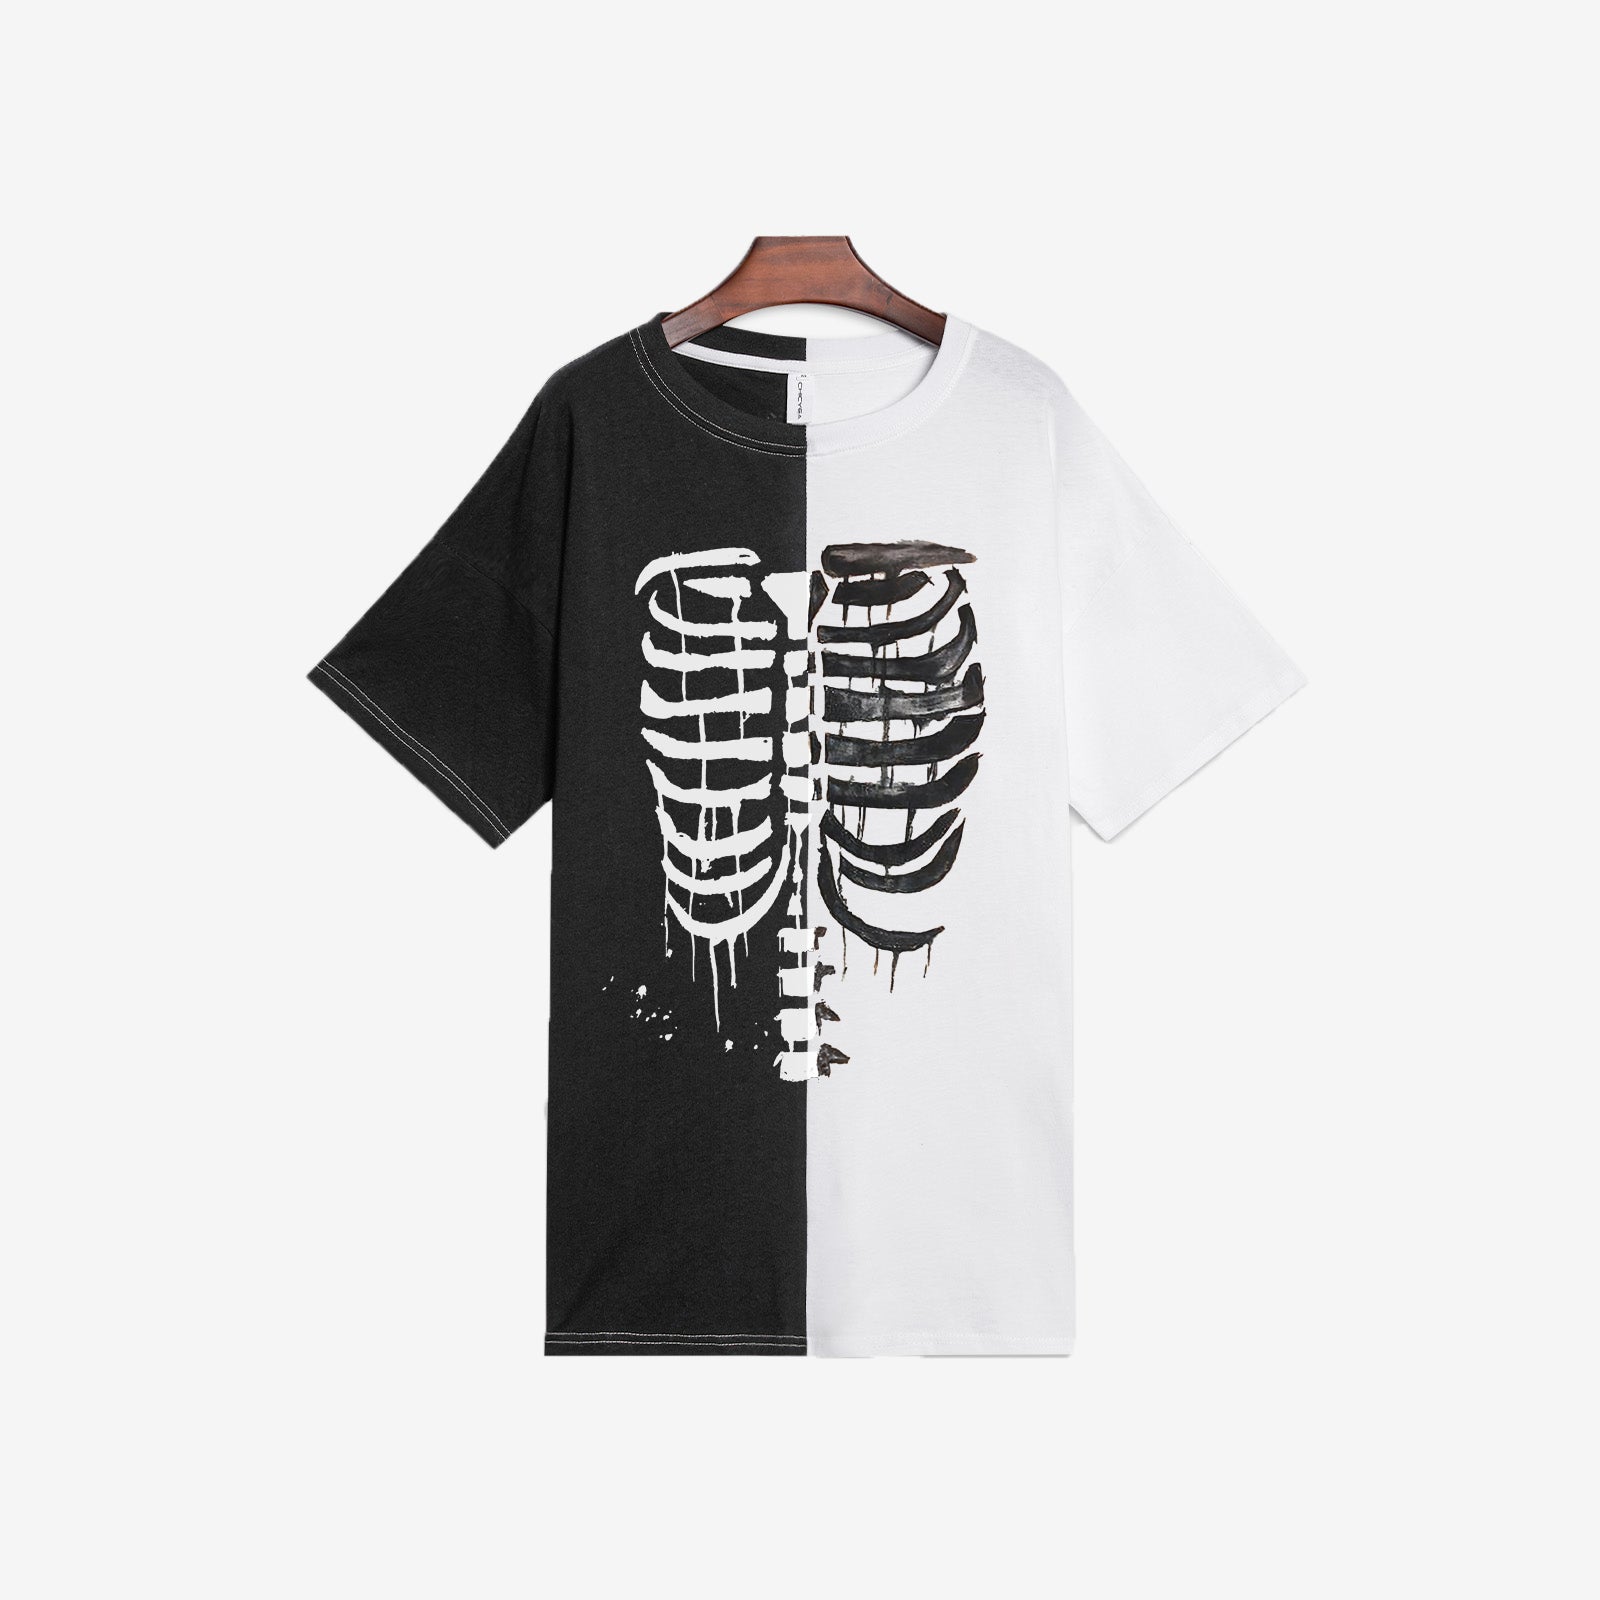 Minnieskull Black And White Skeleton Print T-Shirts